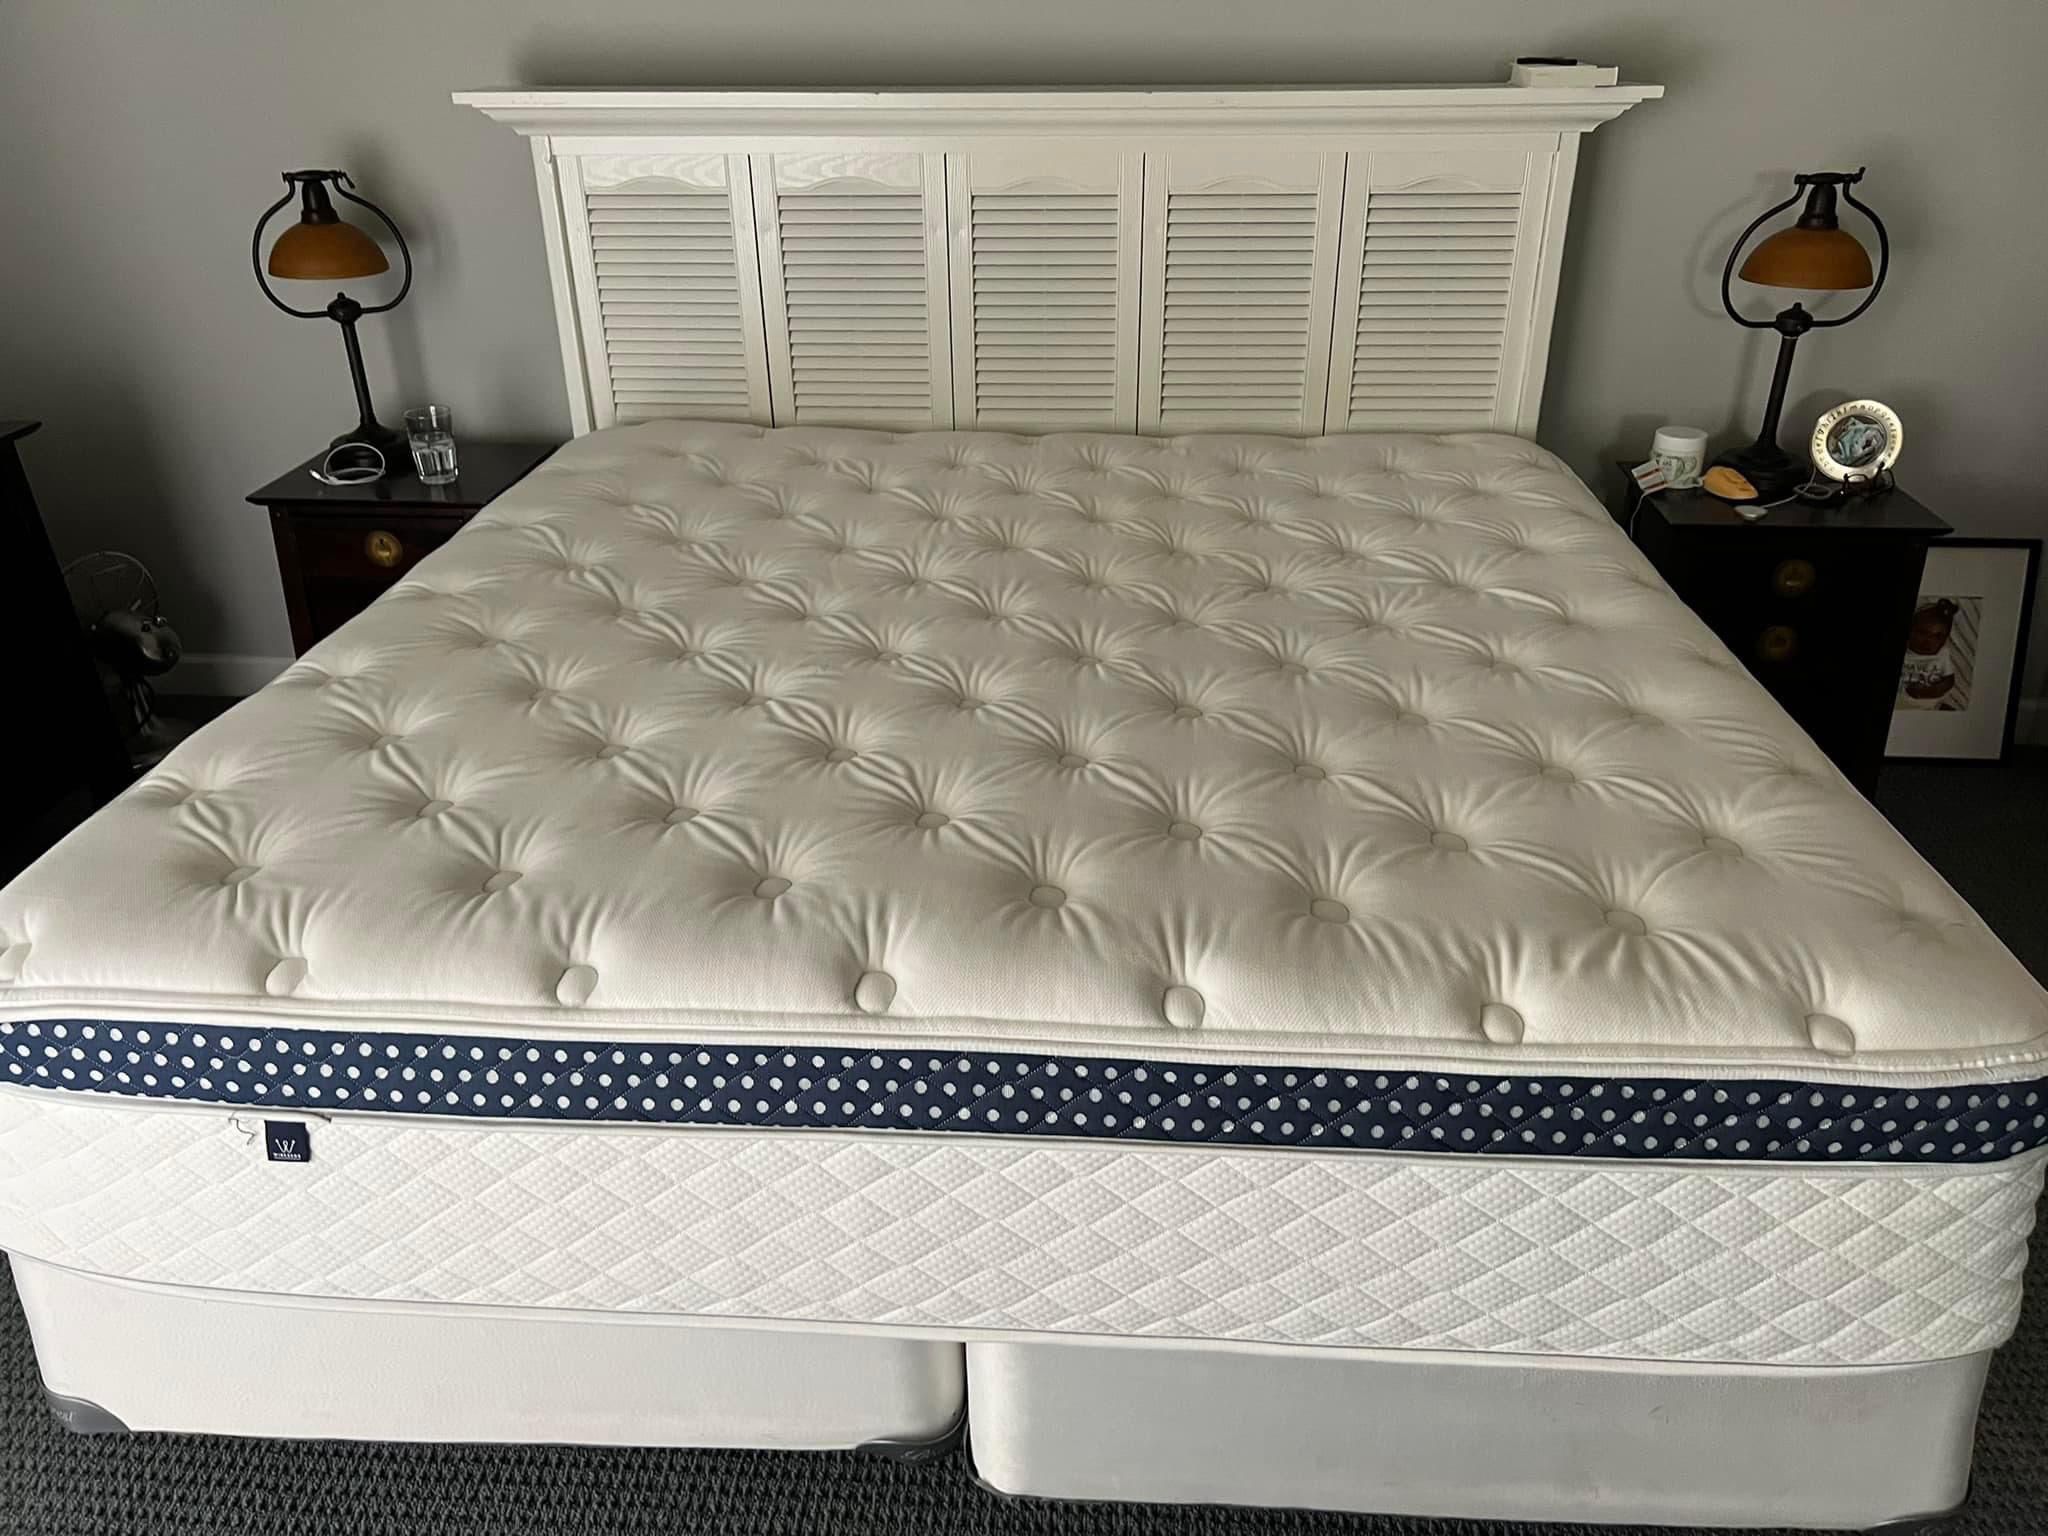 almandine luxury firm california king mattress